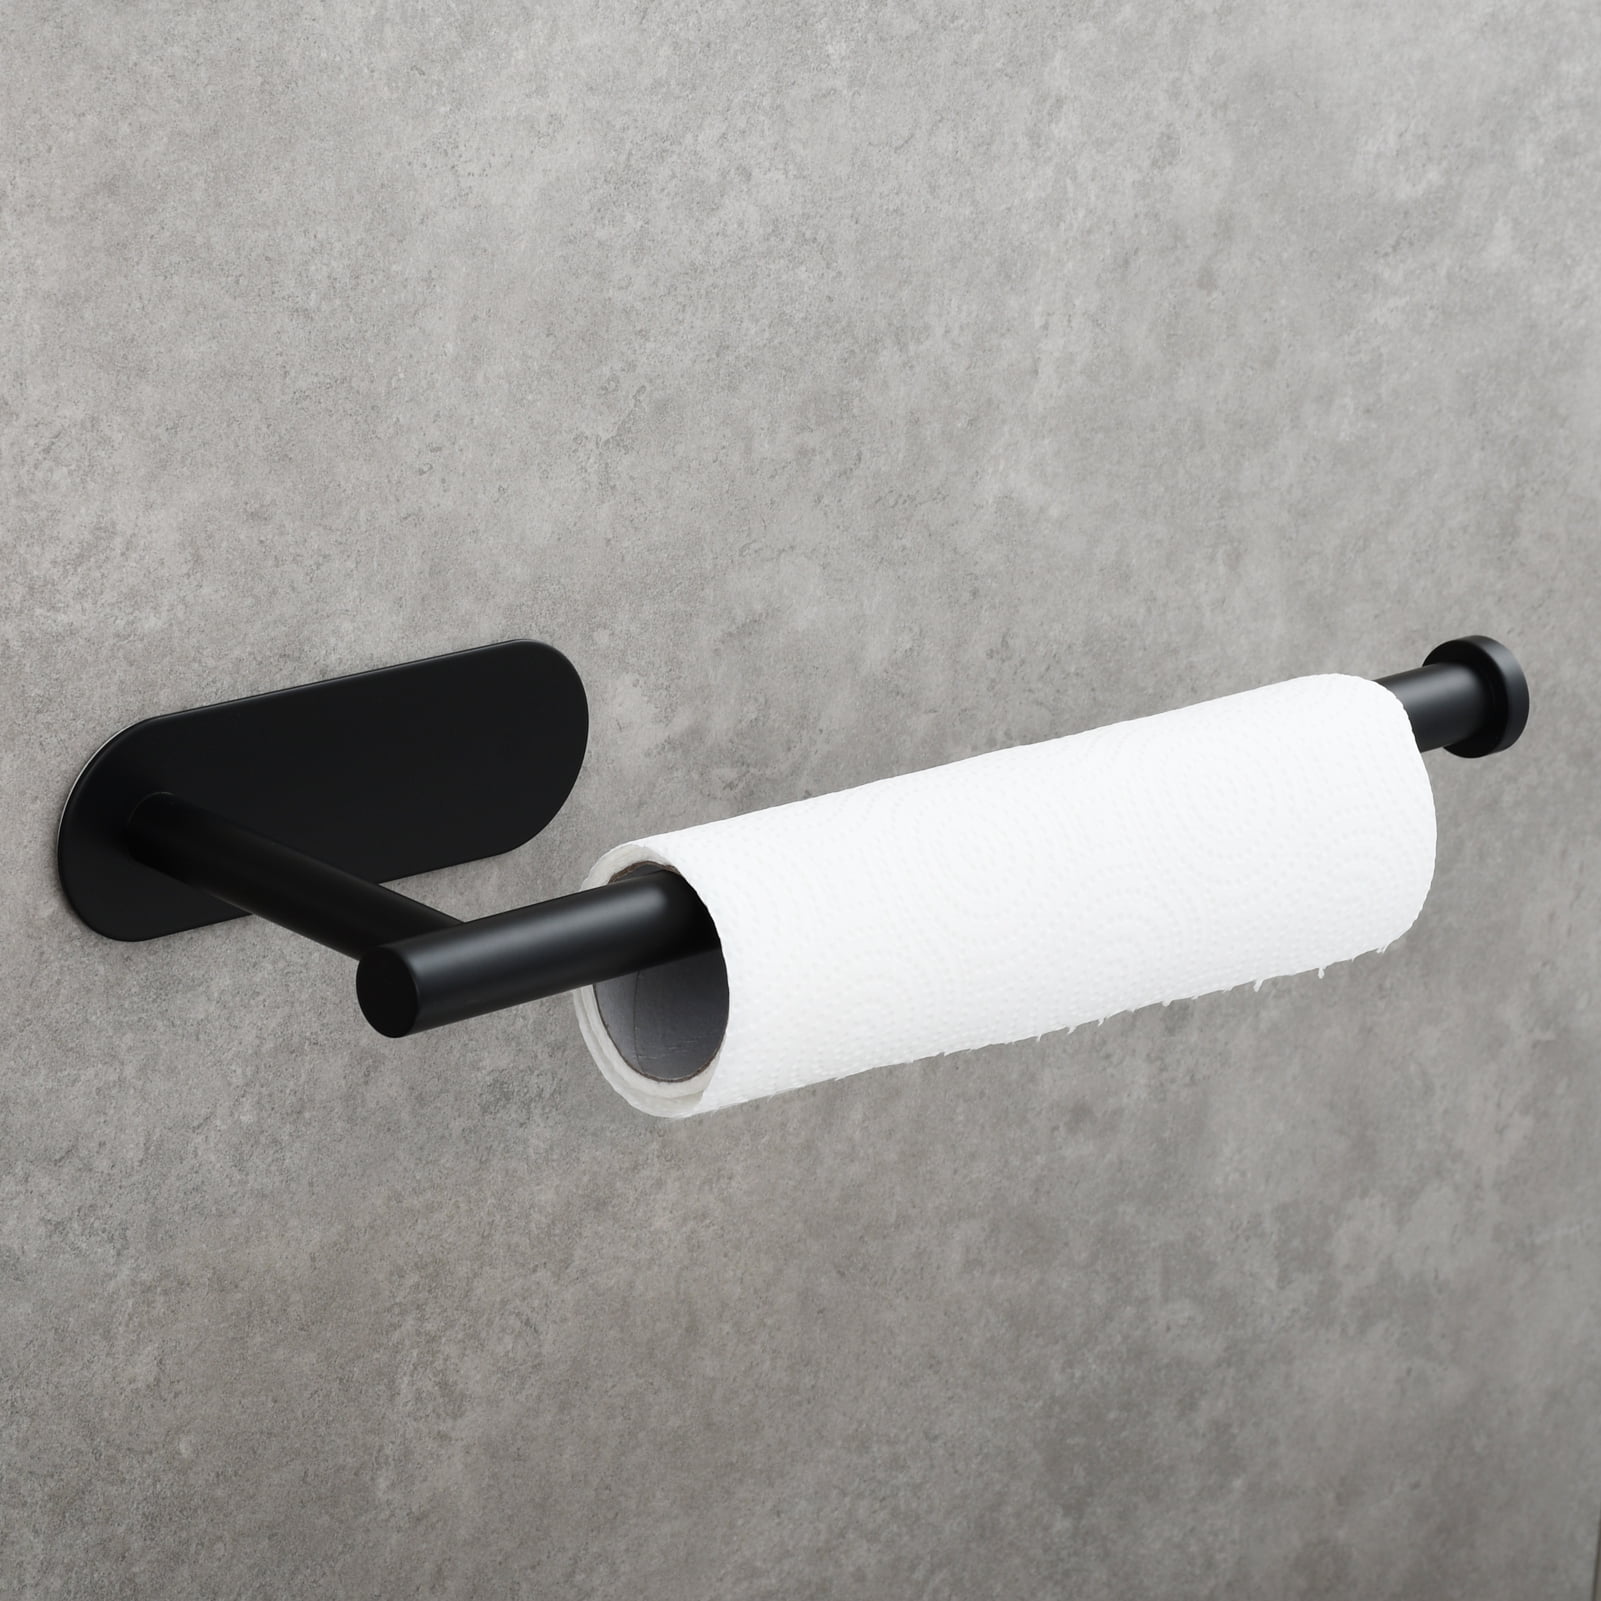 Details about   Toilet Paper Holder Sanitary Roll Holder Towel Holder Multifunction Shelves 